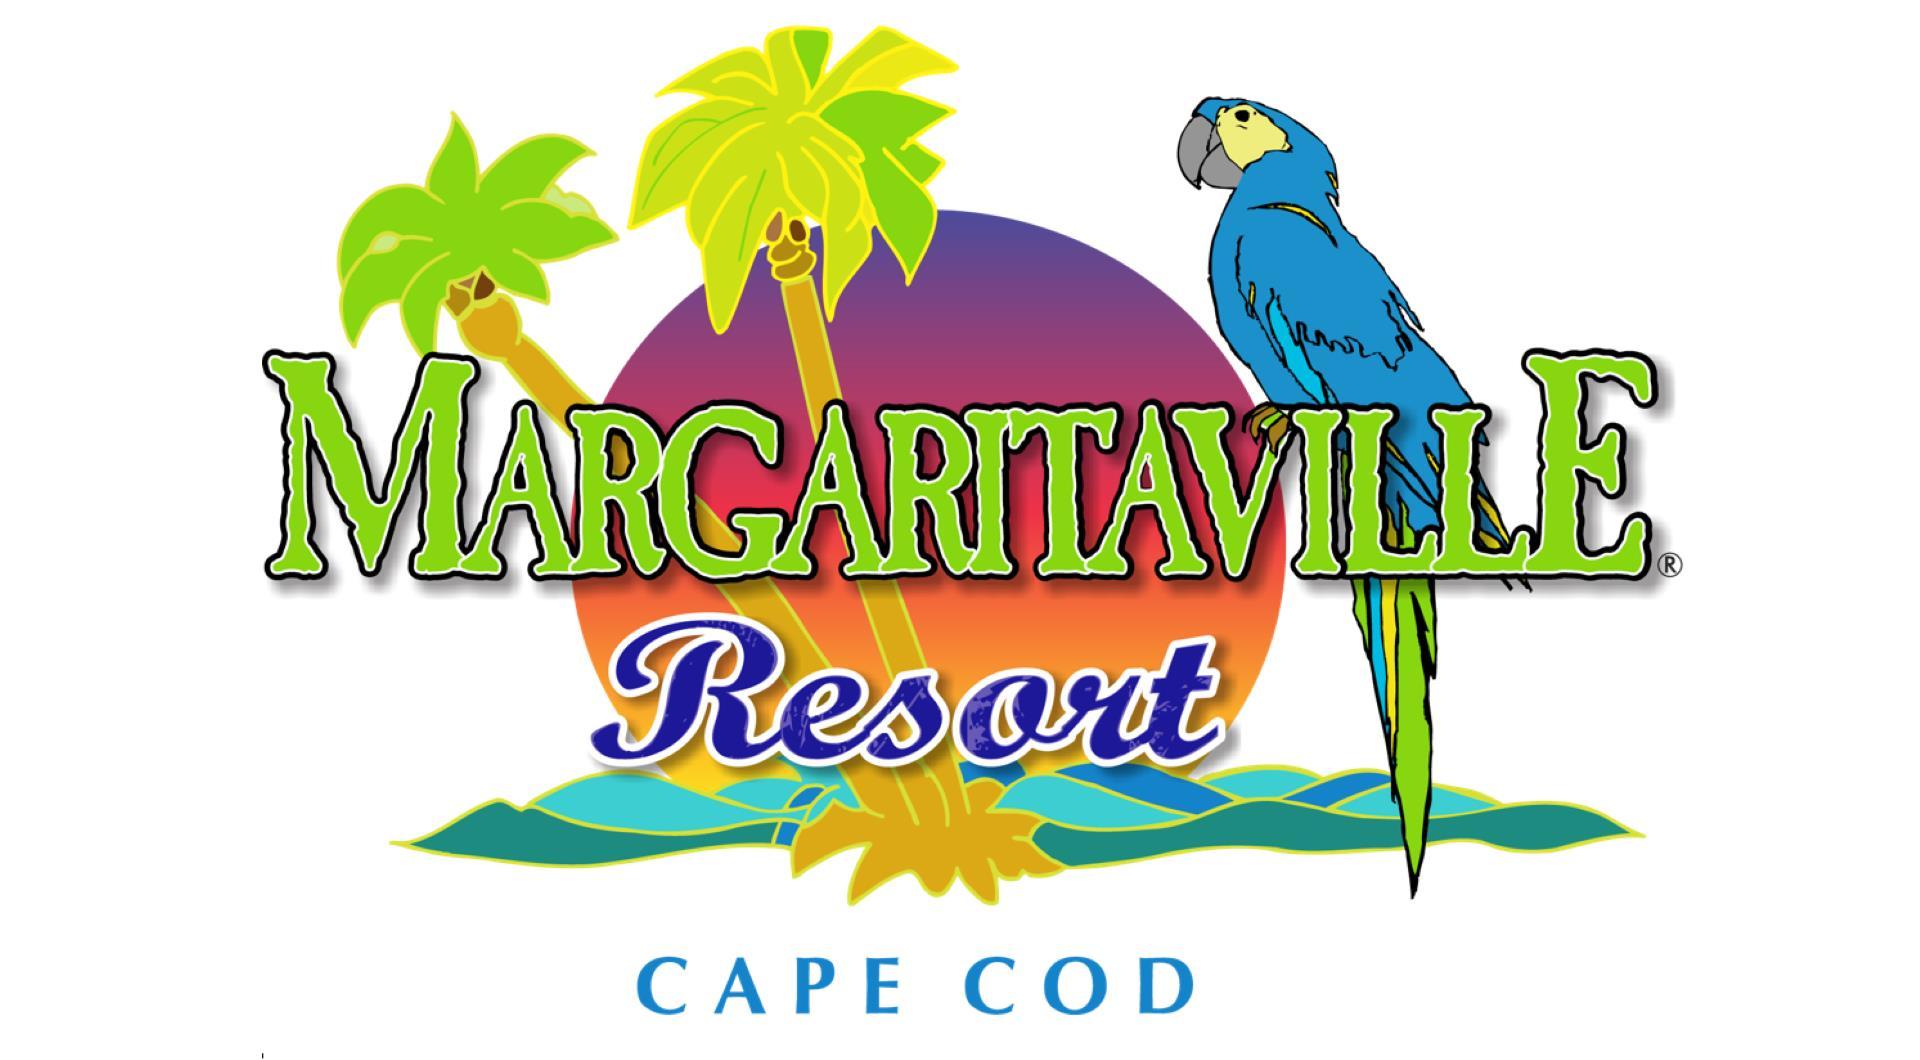 Cape Codder - Coming Soon Margaritaville Resort, 2024! in Hyannis, MA